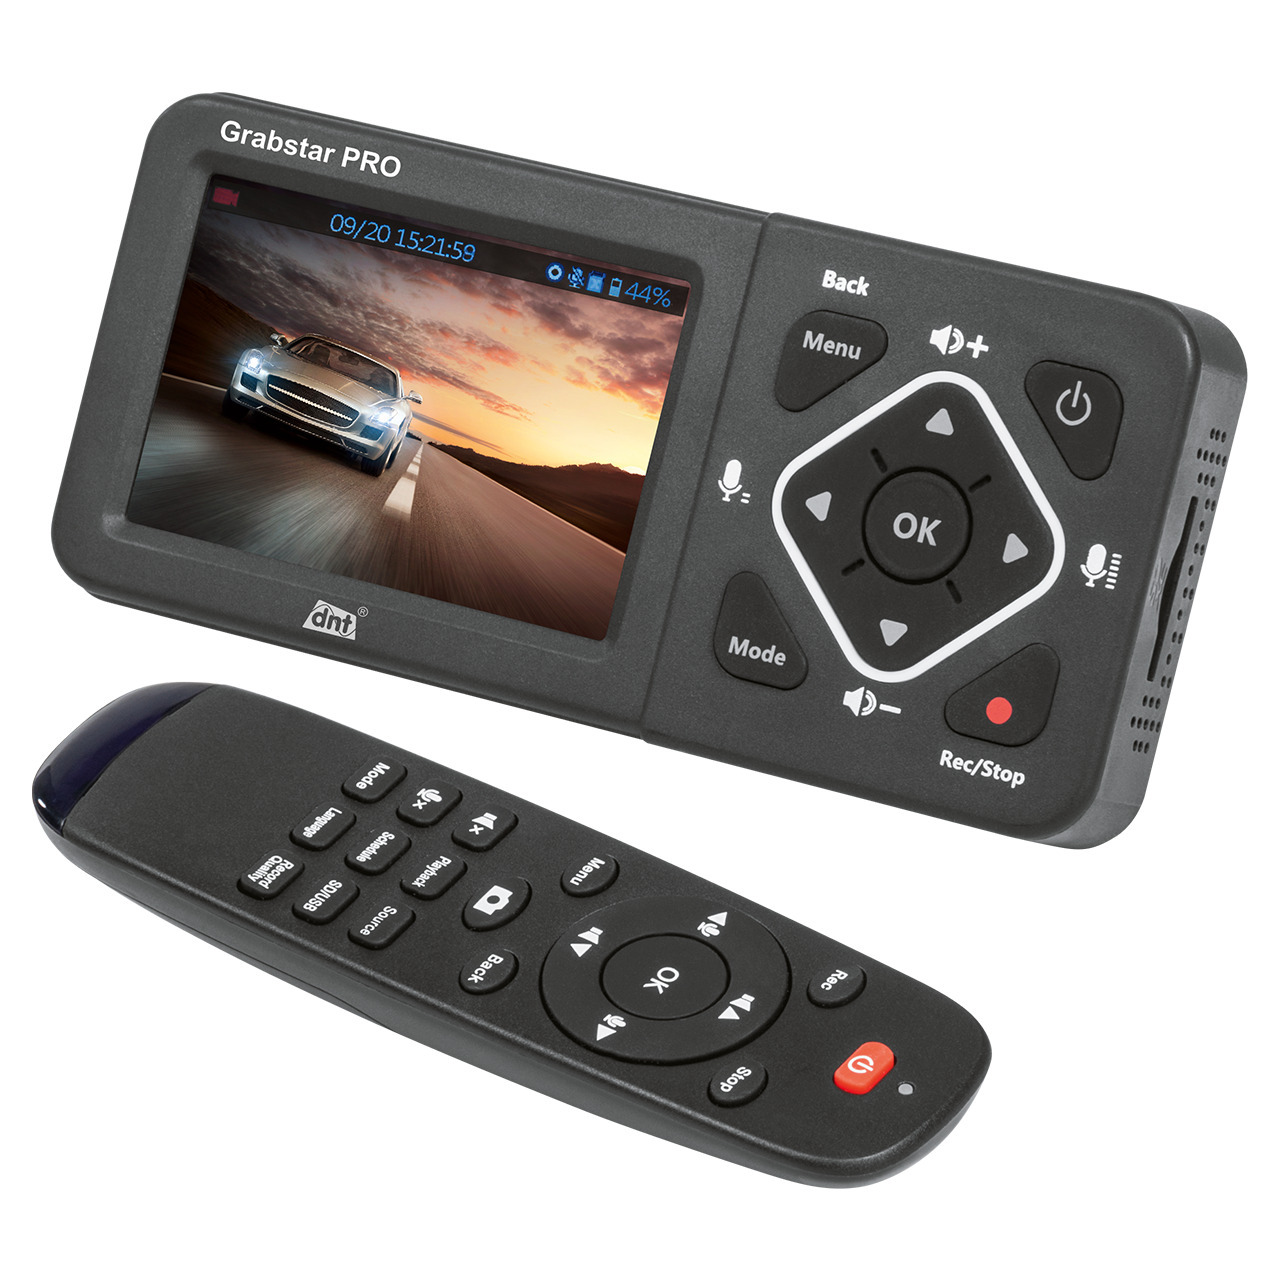 dnt HDMI-Video-Digitalisierer Grabstar PRO- 8-9-cm-LC-Display (3-5)- 1080p- SD-USB- Game Capture unter Multimedia